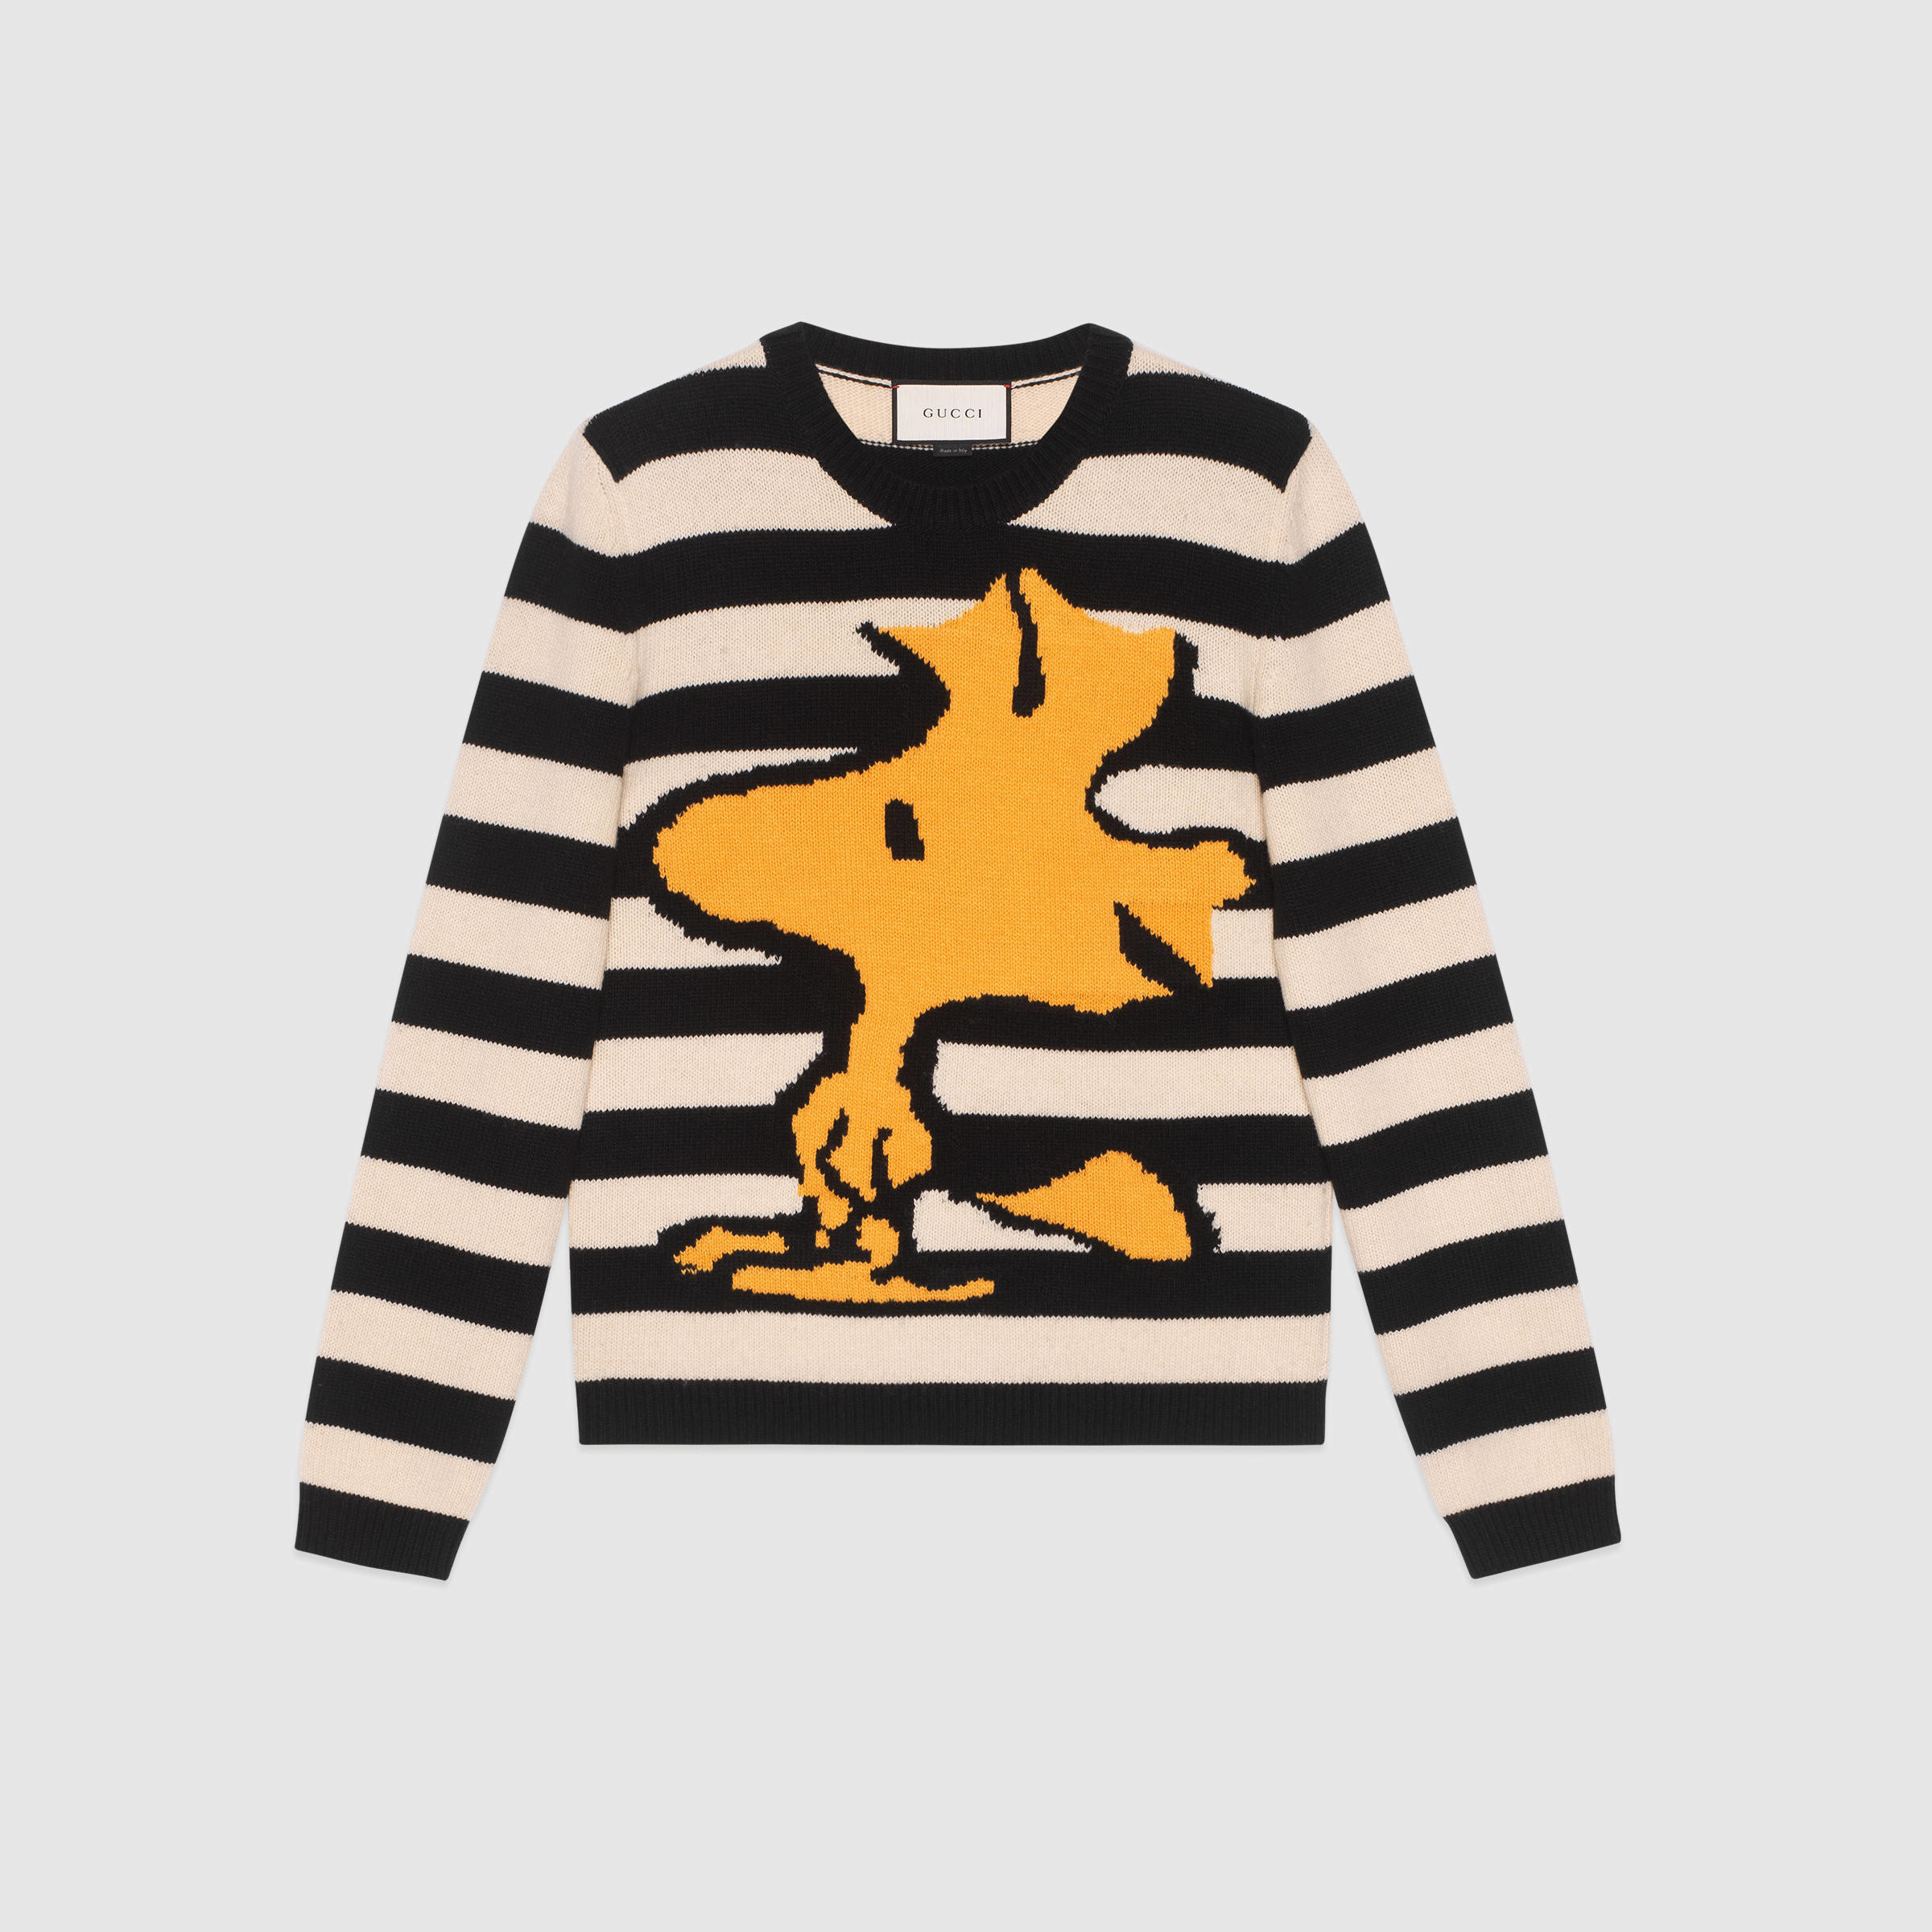 Gucci Striped Wool Woodstock Sweater in 